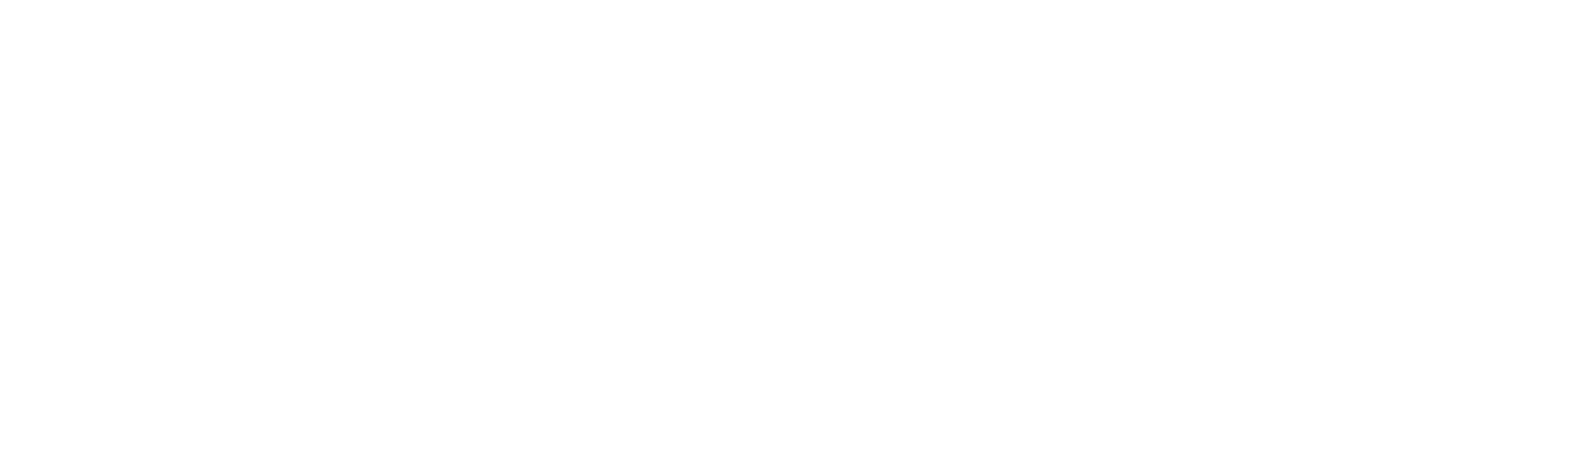 Edad: 20 Educacion: Educacion Secundario Profesion: Certified Life Coach & Entrepreneur